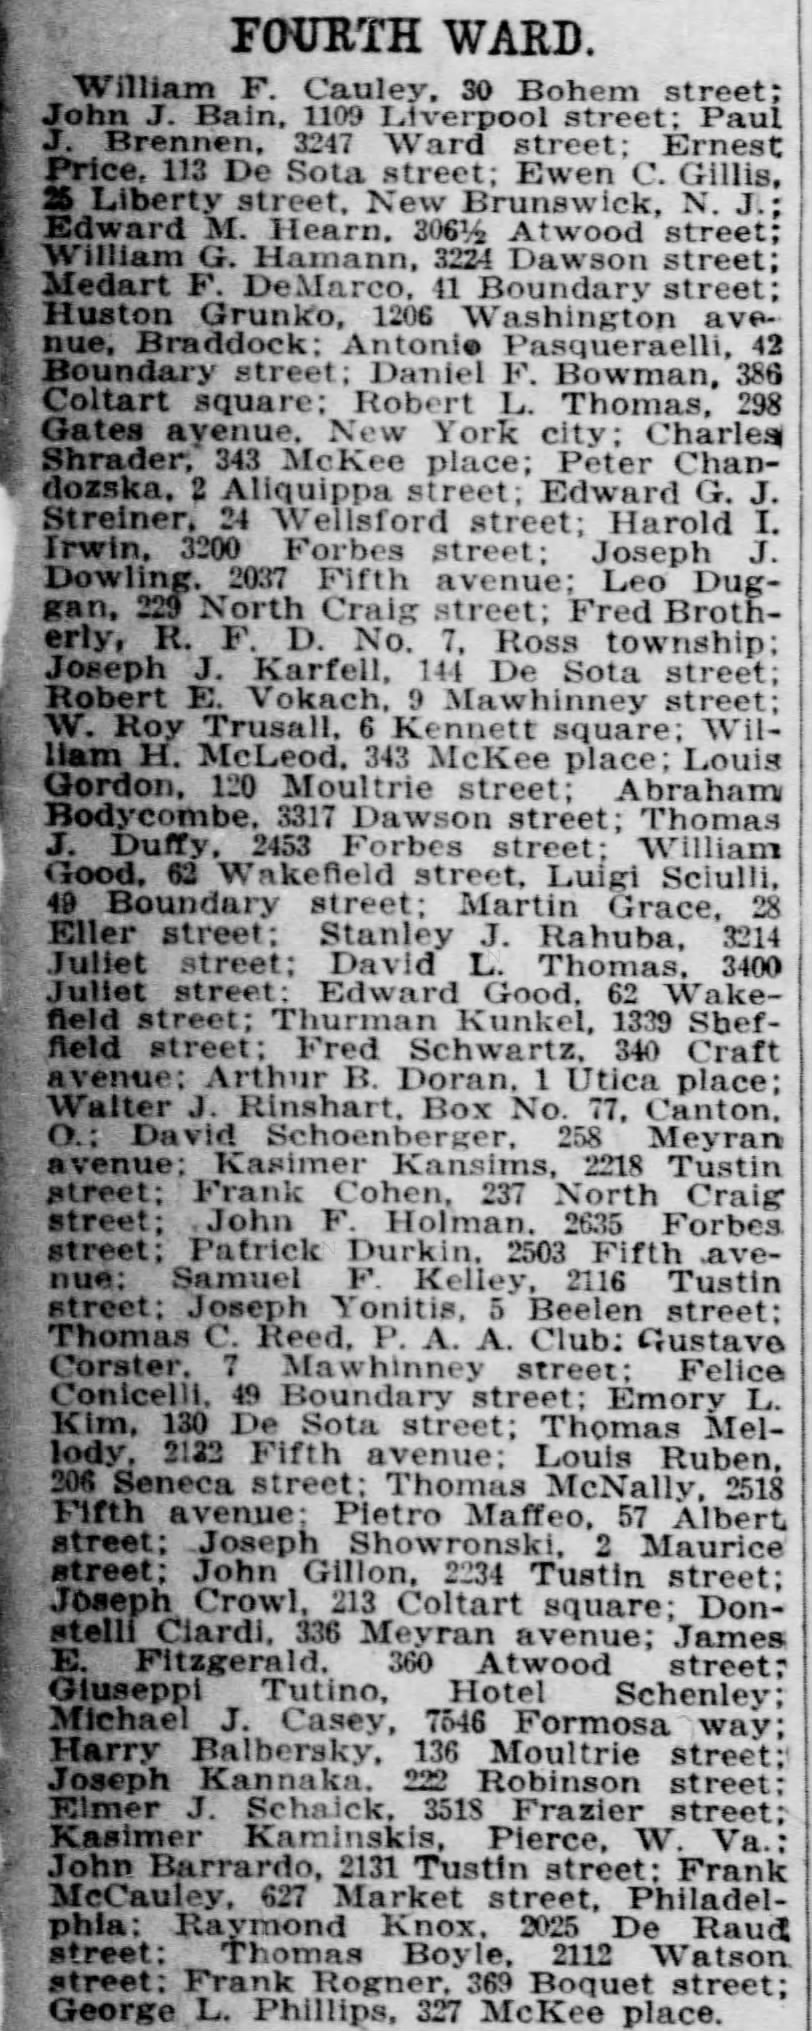 Joseph Kannaka listed in Fourth Ward. Pittsburgh Daily Post - July 25, 1918